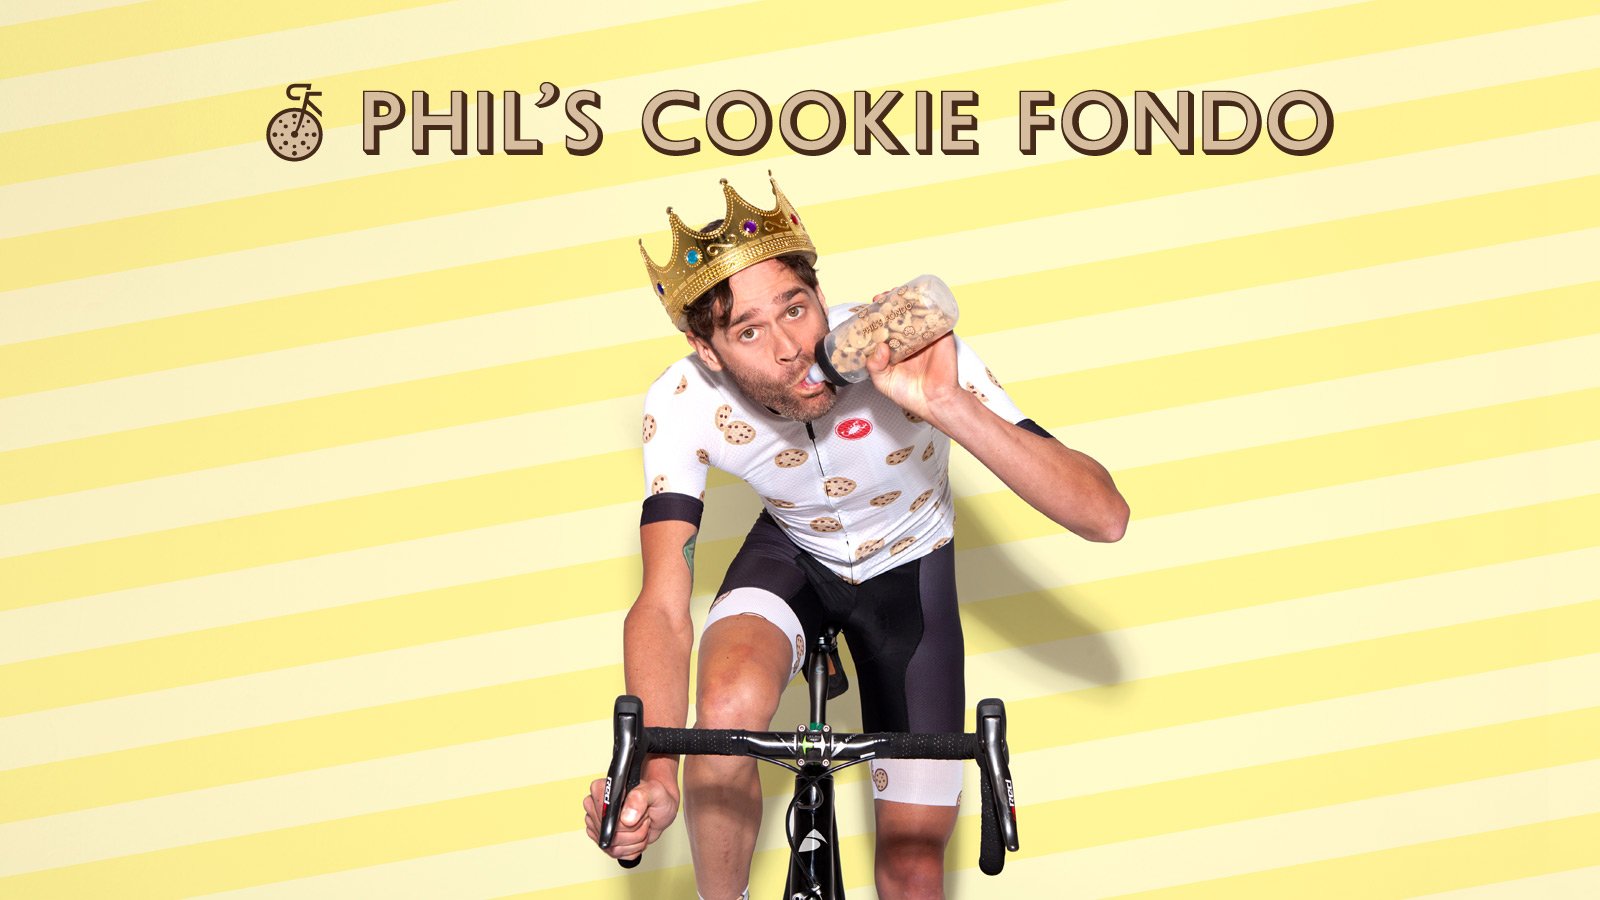 Phils Cookie Fondo